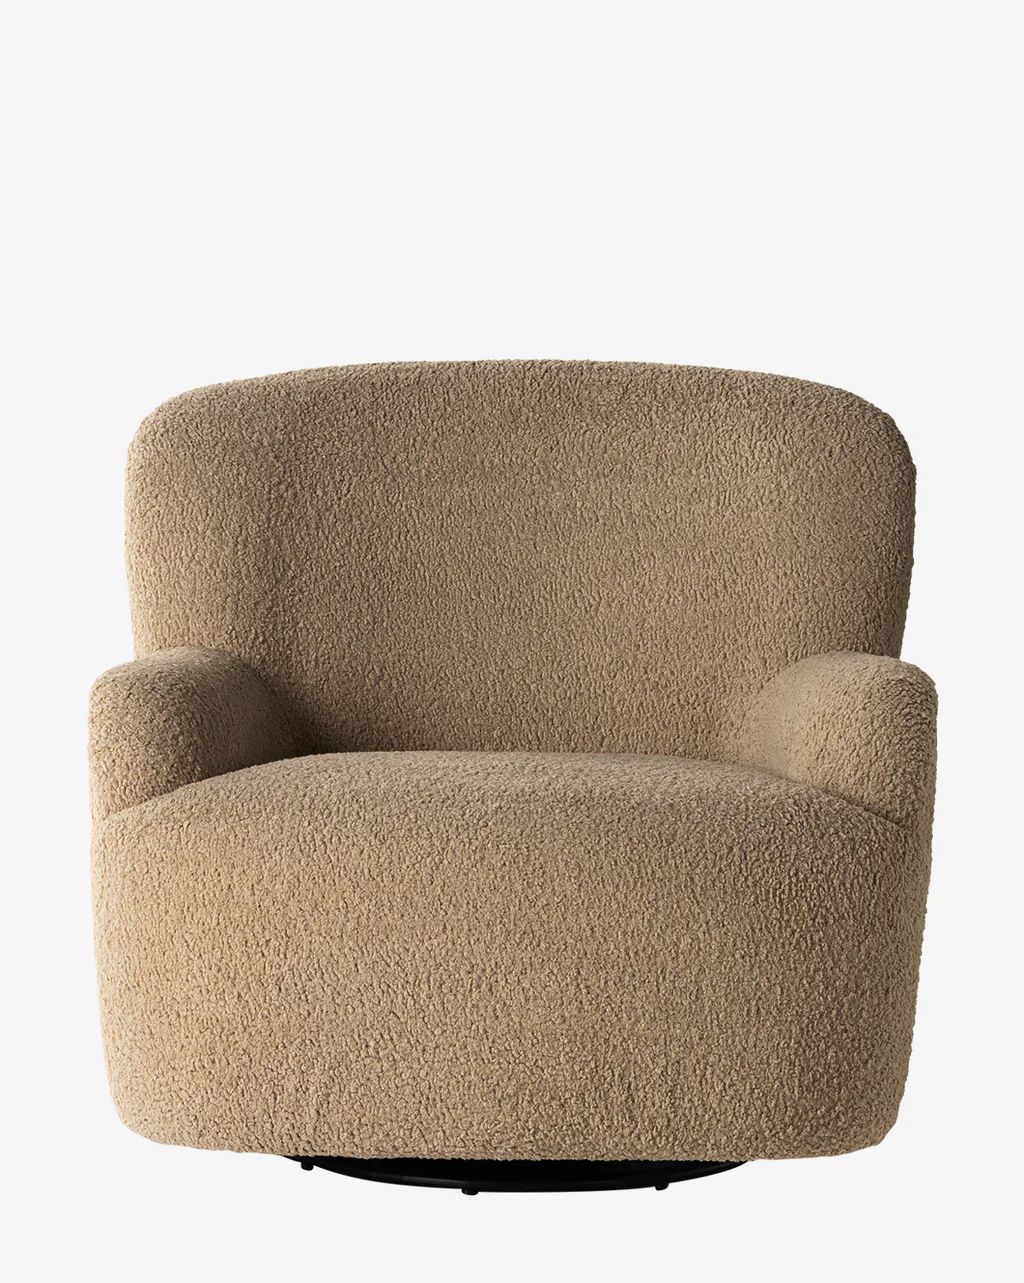 Adelia Swivel Chair | McGee & Co. (US)